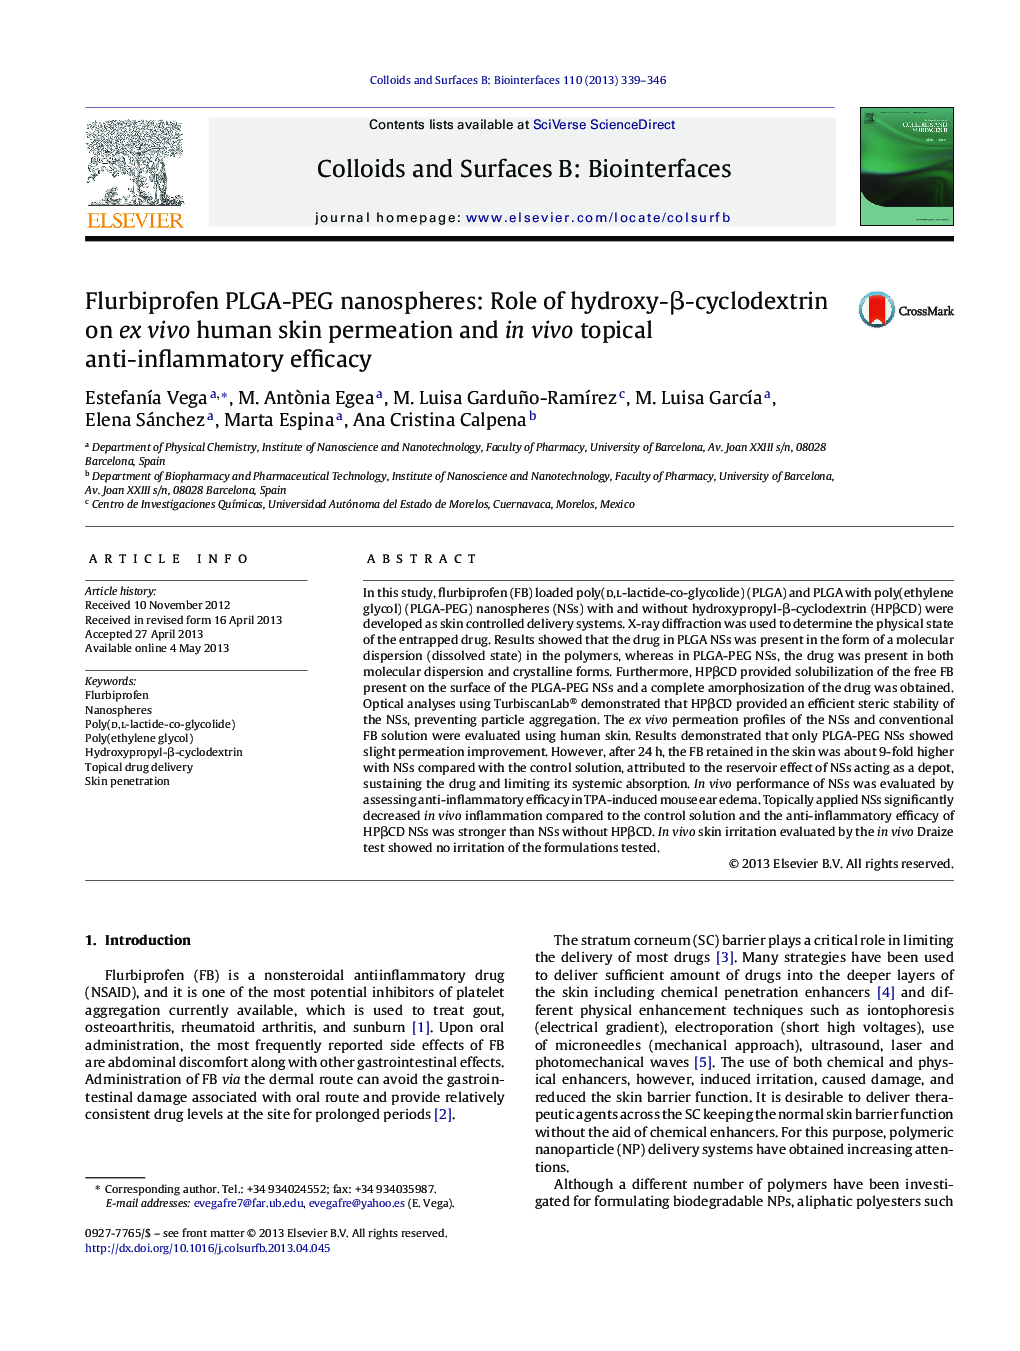 Flurbiprofen PLGA-PEG nanospheres: Role of hydroxy-Î²-cyclodextrin on ex vivo human skin permeation and in vivo topical anti-inflammatory efficacy